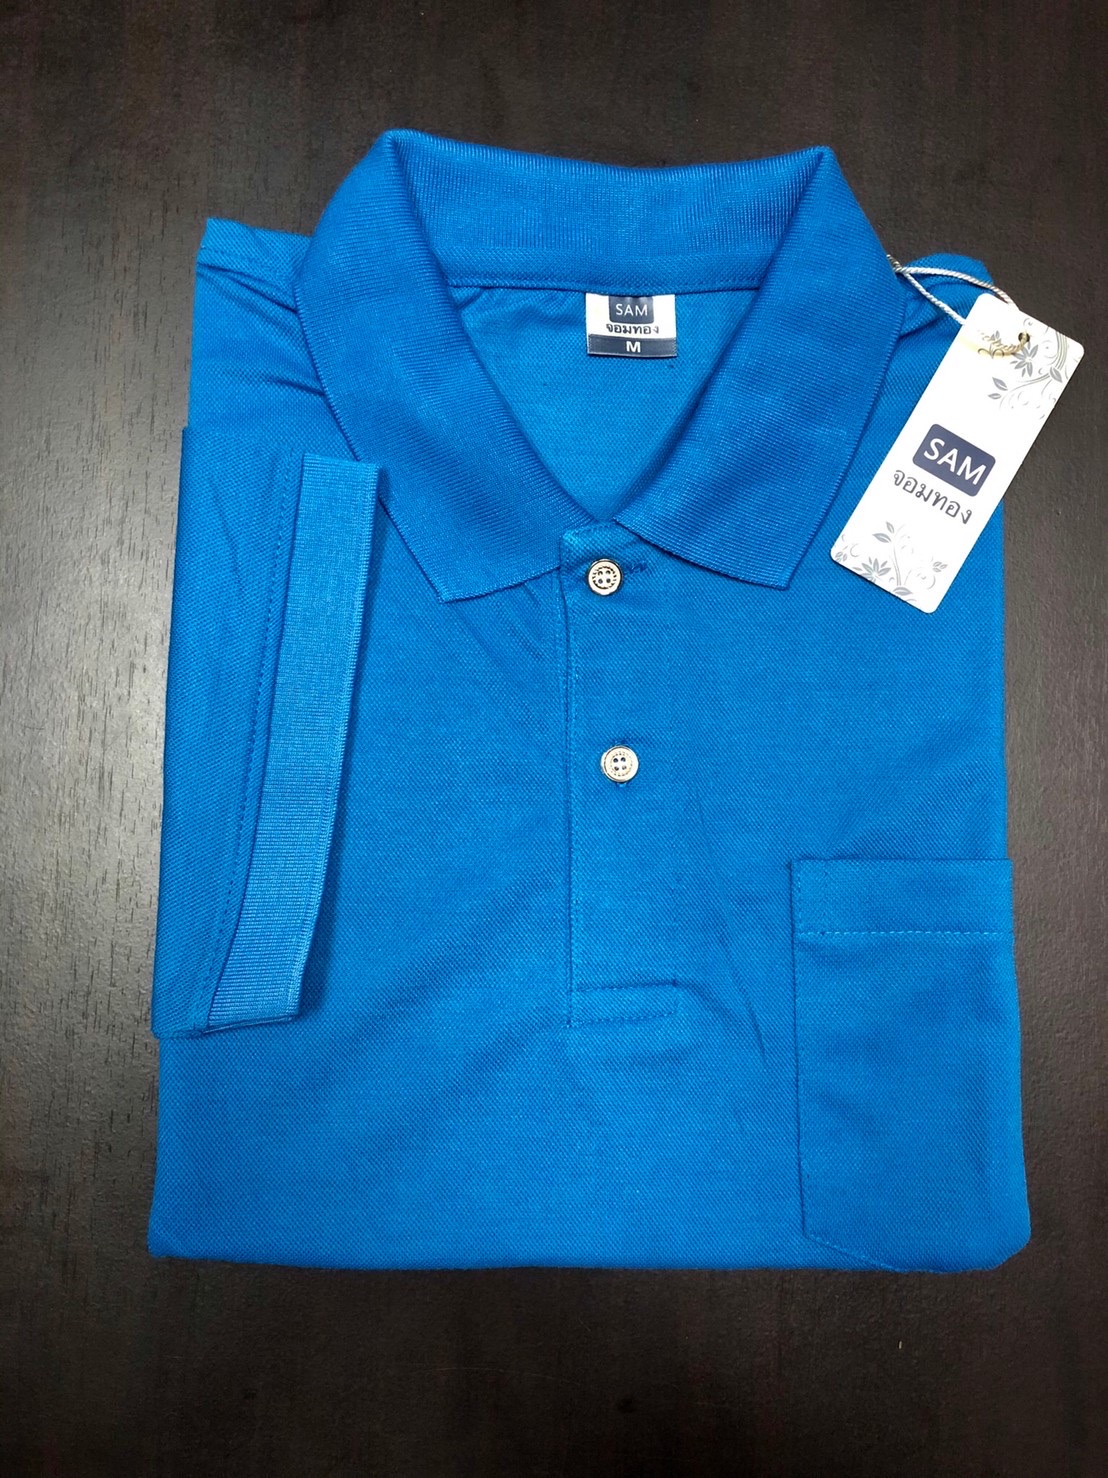 C H shop เสื้อโปโลสีล้วน เสื้อโปโลคอปก สีฟ้าทะเล โปโลสีฟ้าเข้ม